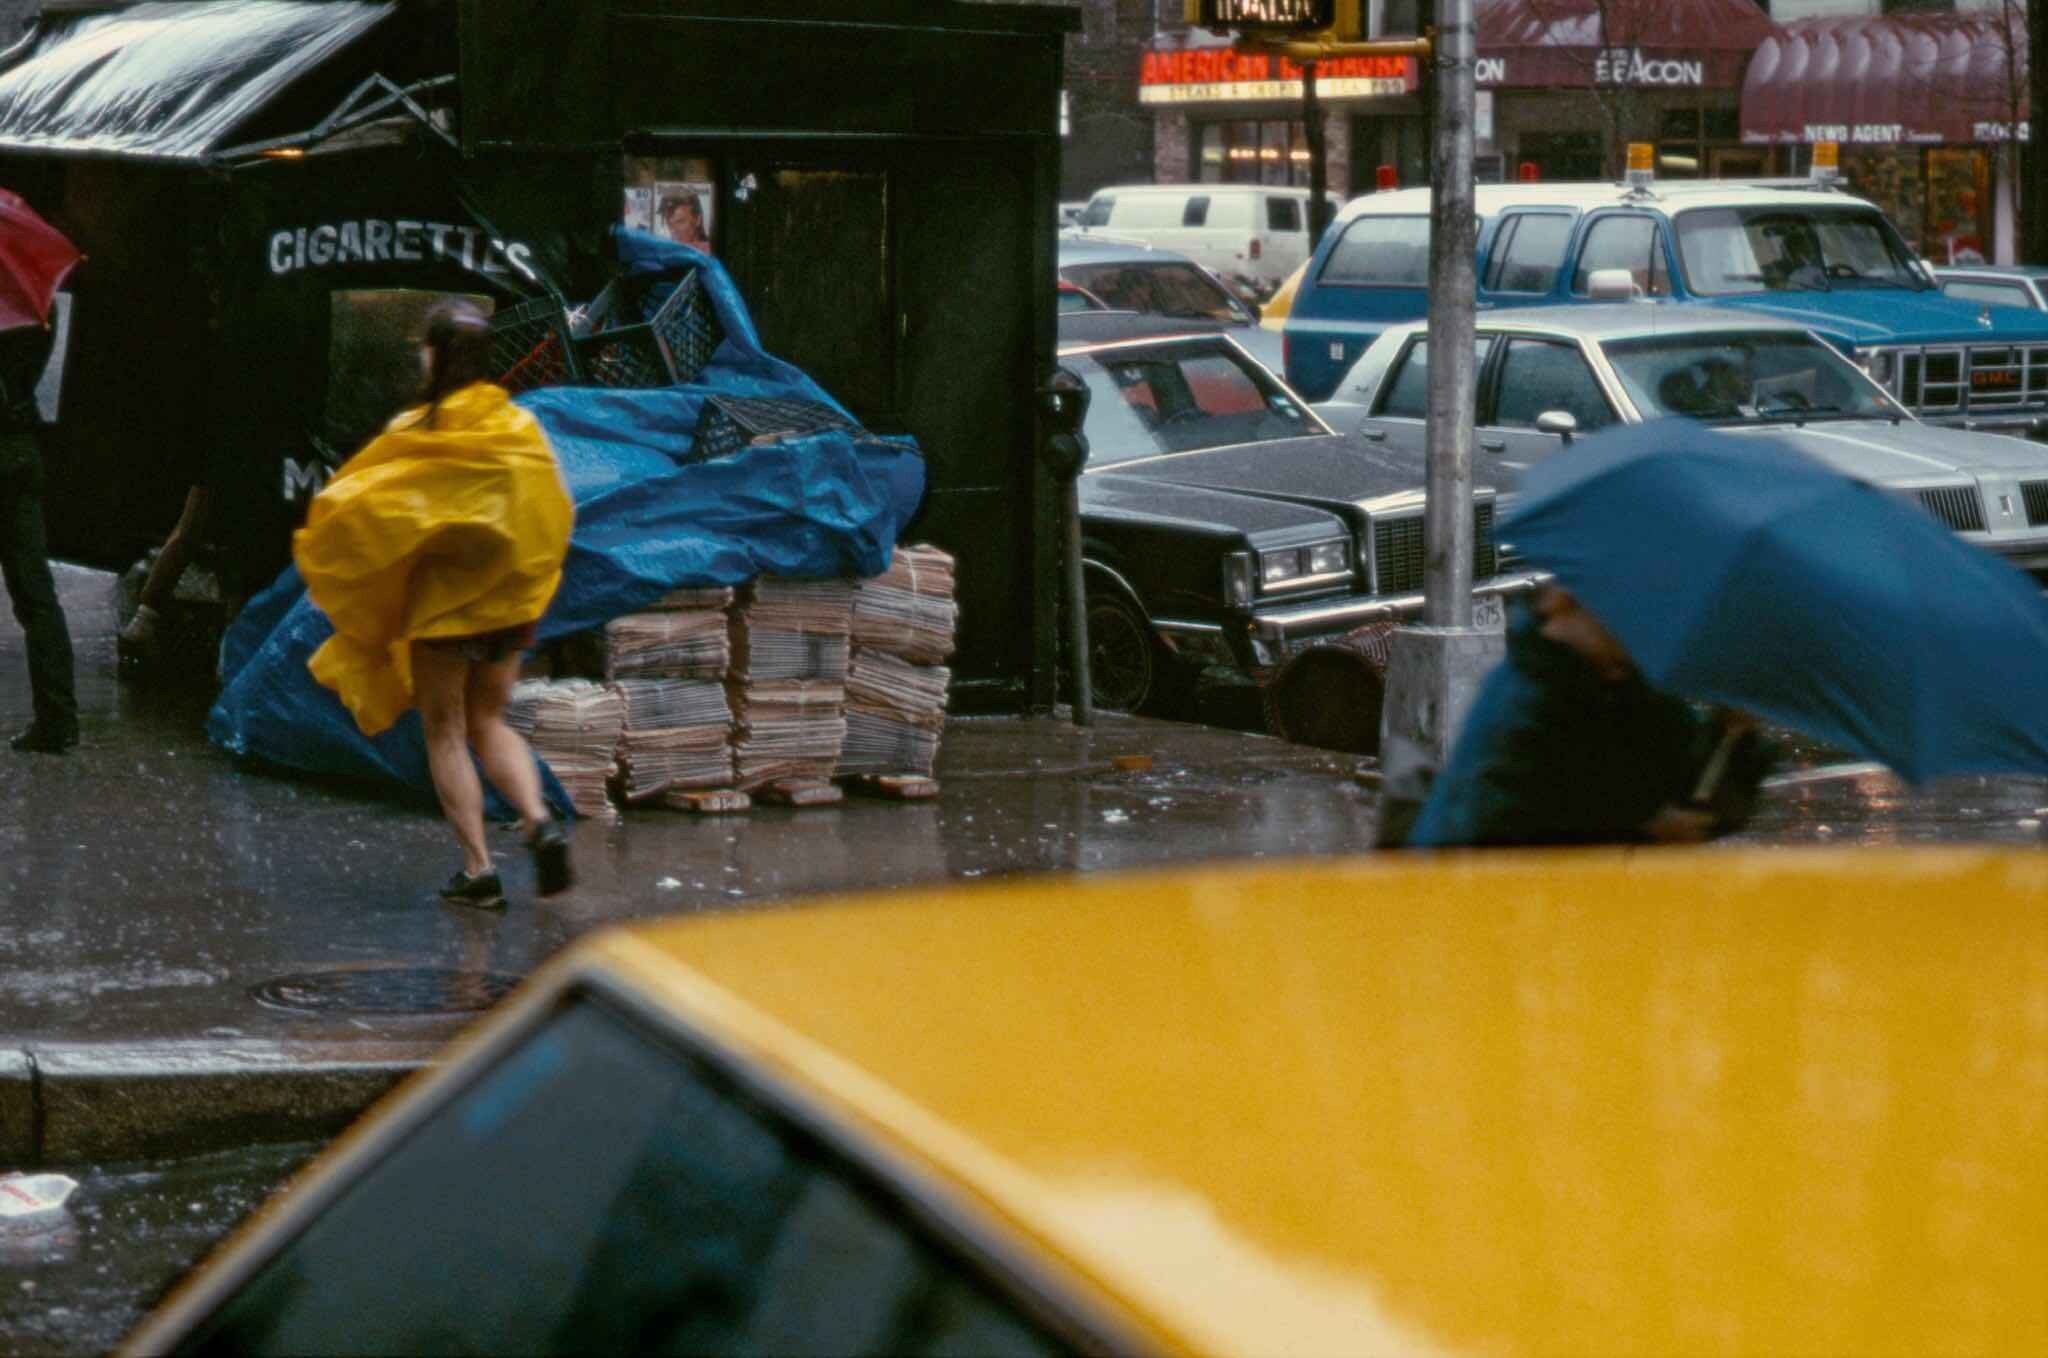 1986 год, Нью-Йорк, бег под дождем. Фотограф Франк Хорват